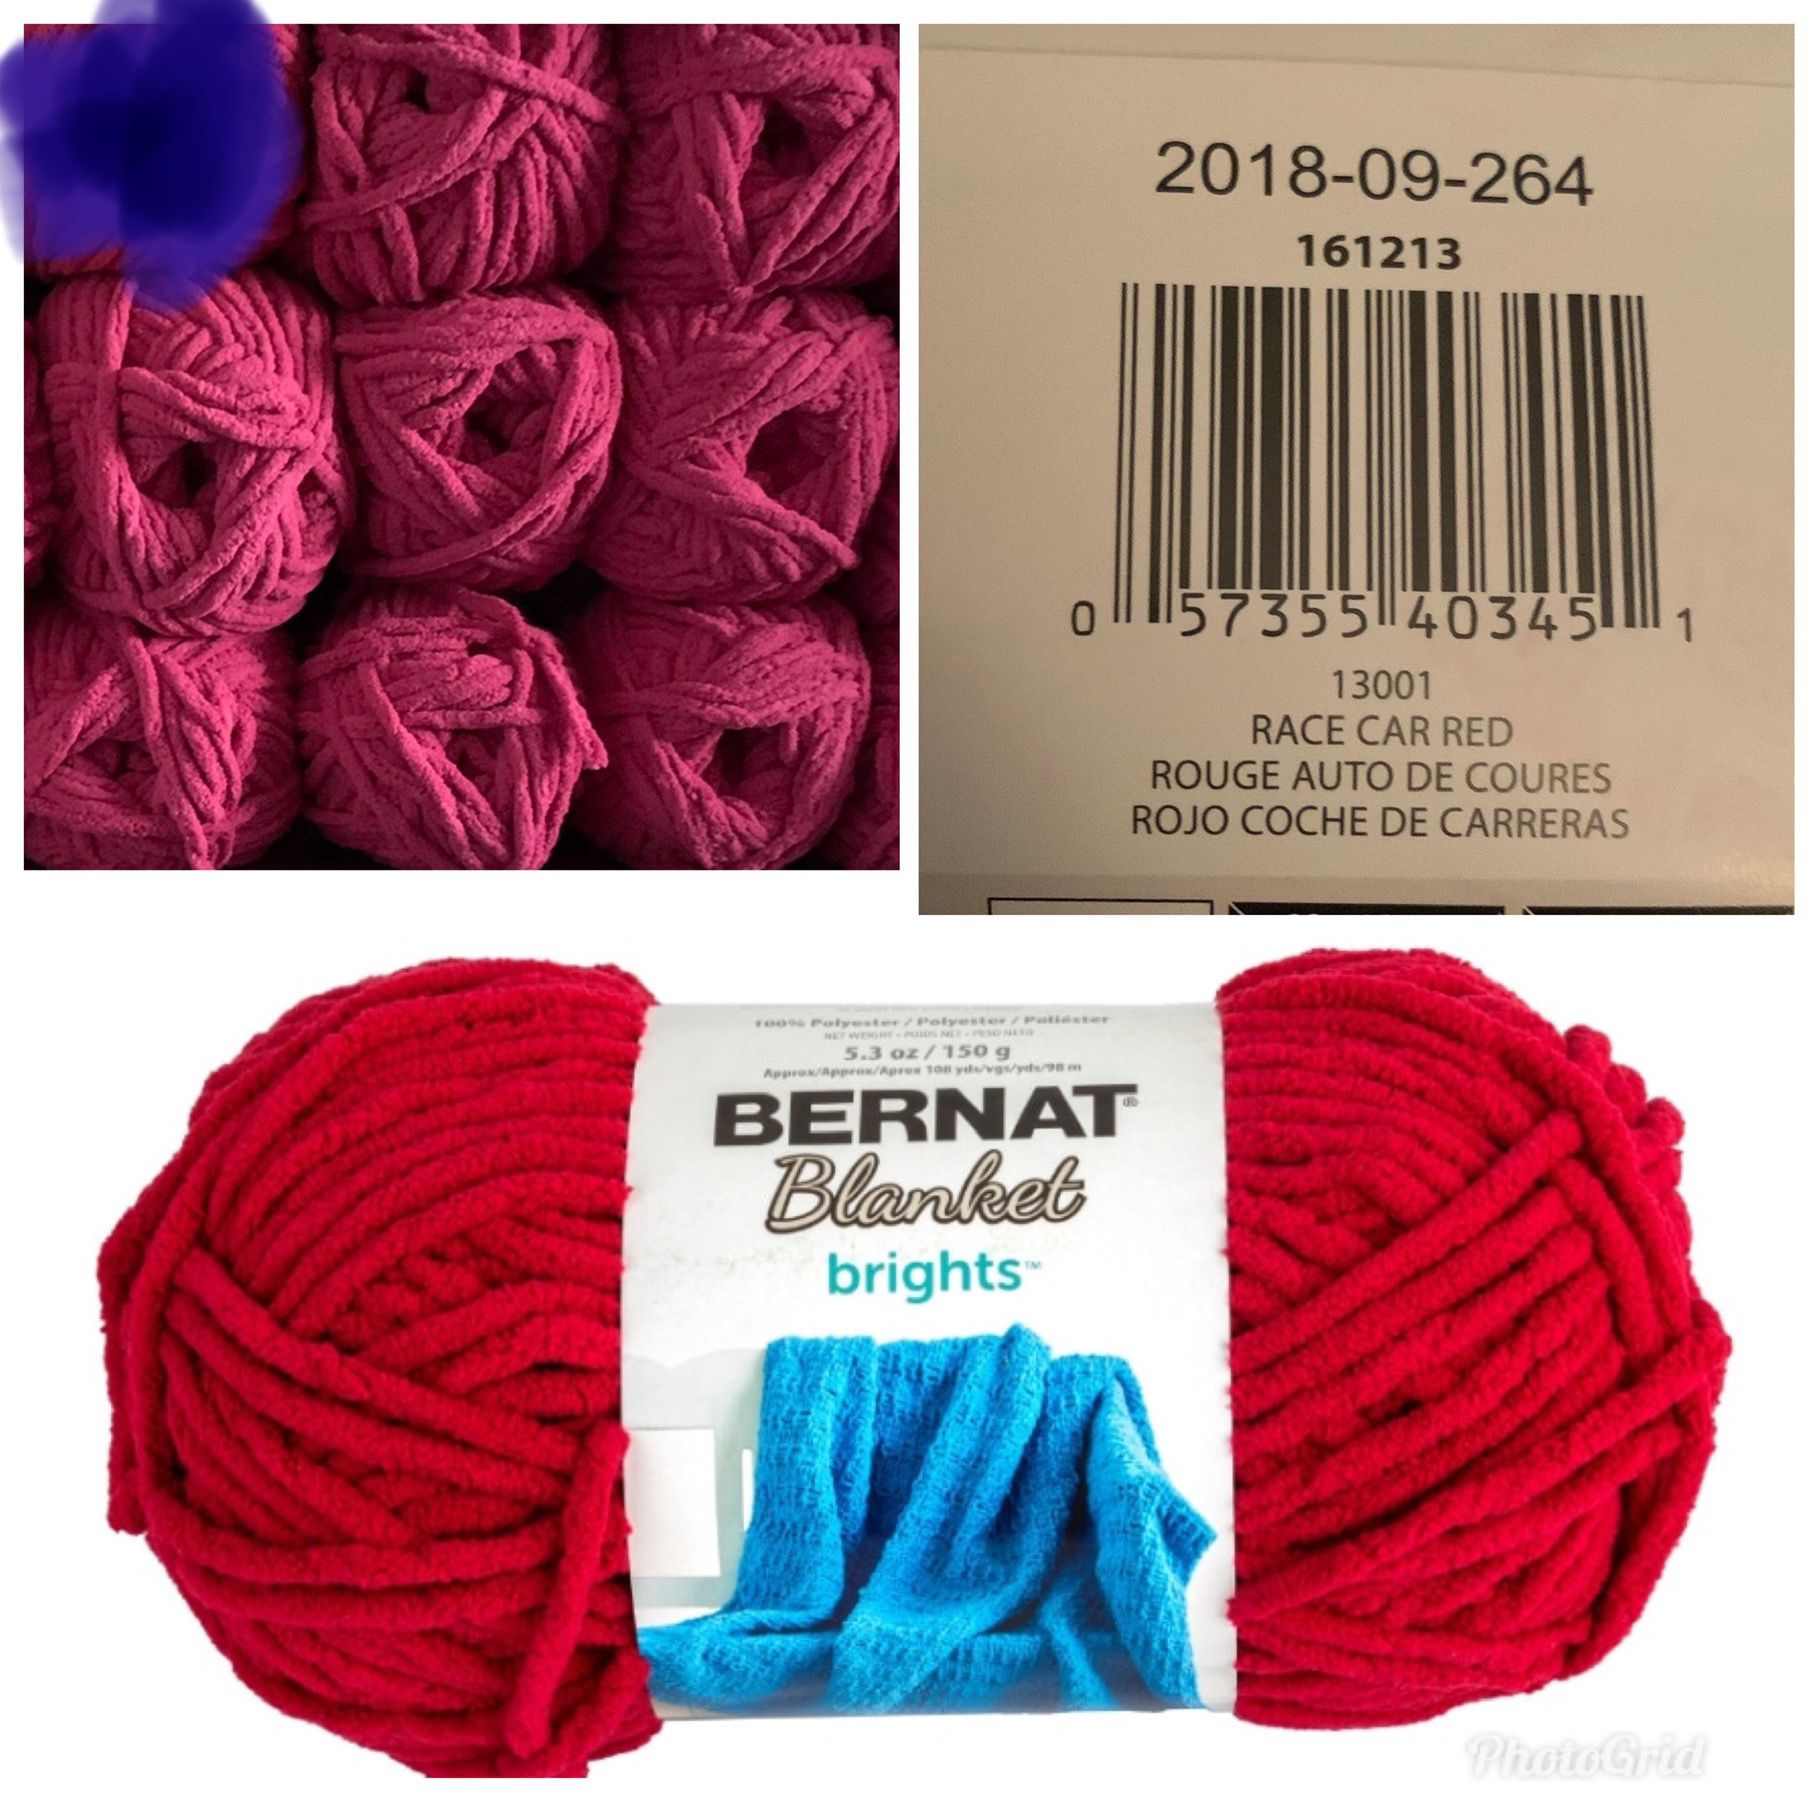 8 skeins of Bernat Blanket Brights yarn in Race Car Red. 5.3 oz. Knit, crochet or crafts.